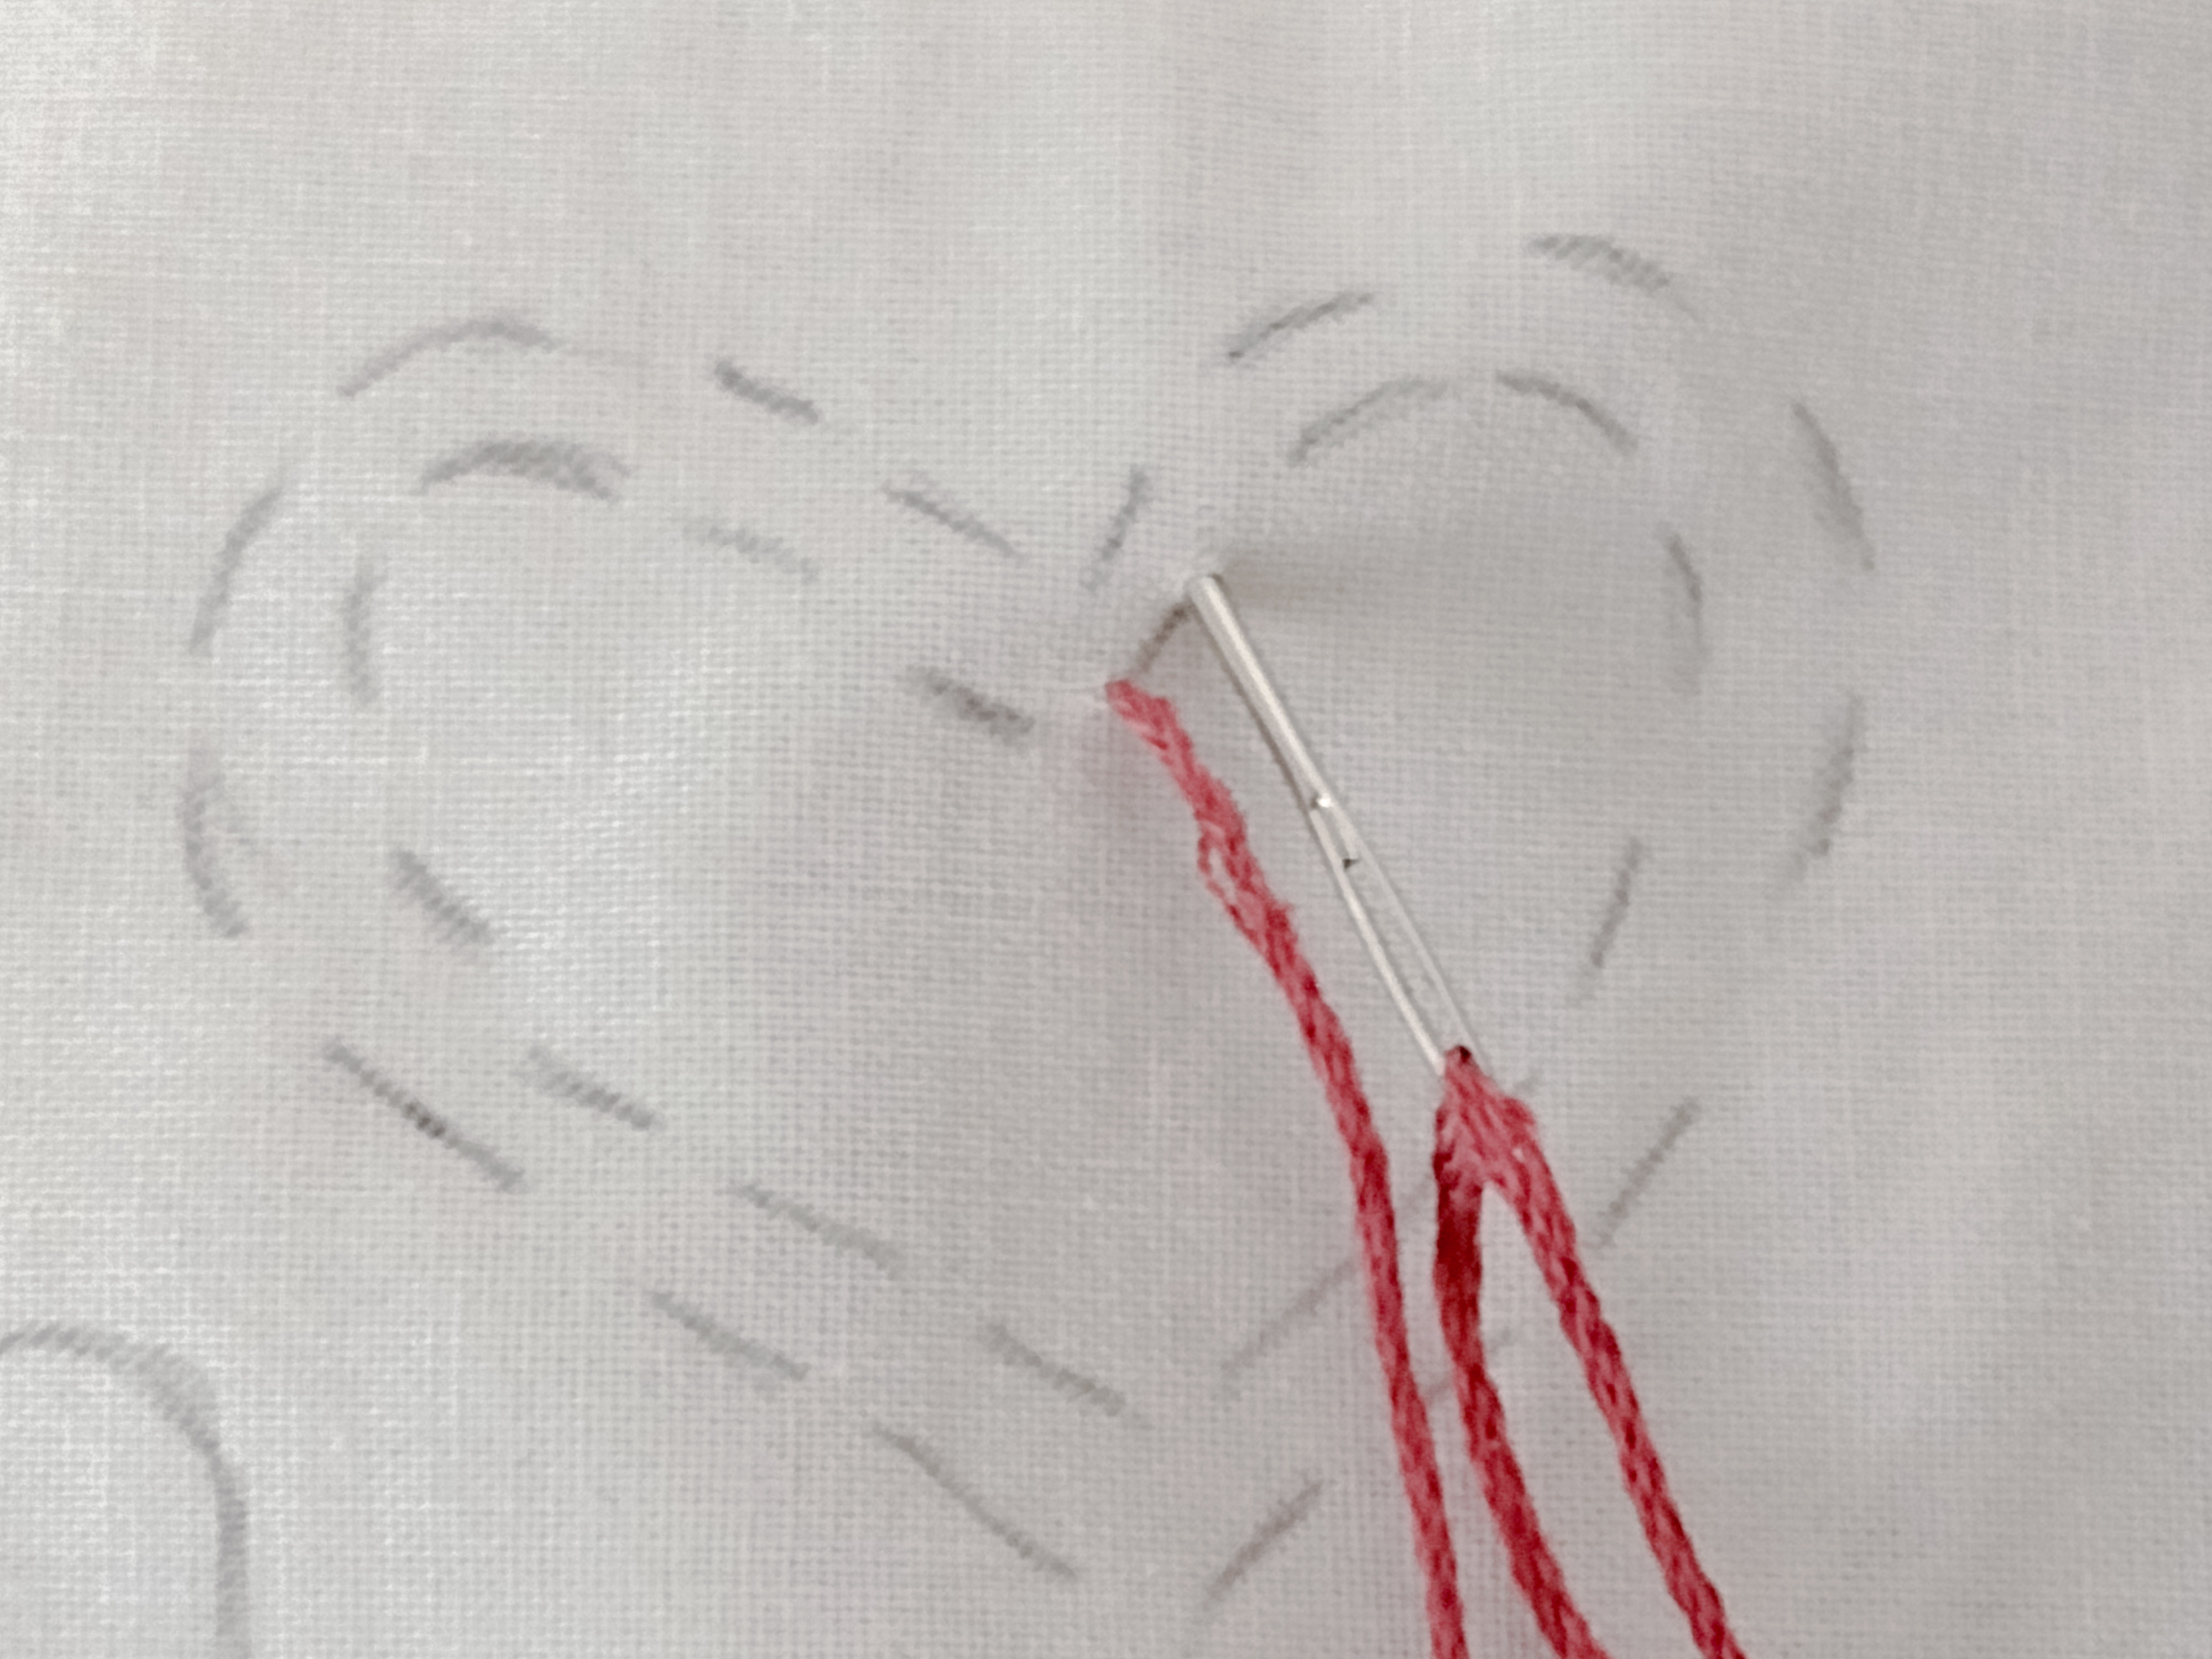 Tutorial for running stitch homeschooling embroidery sampler curriculum